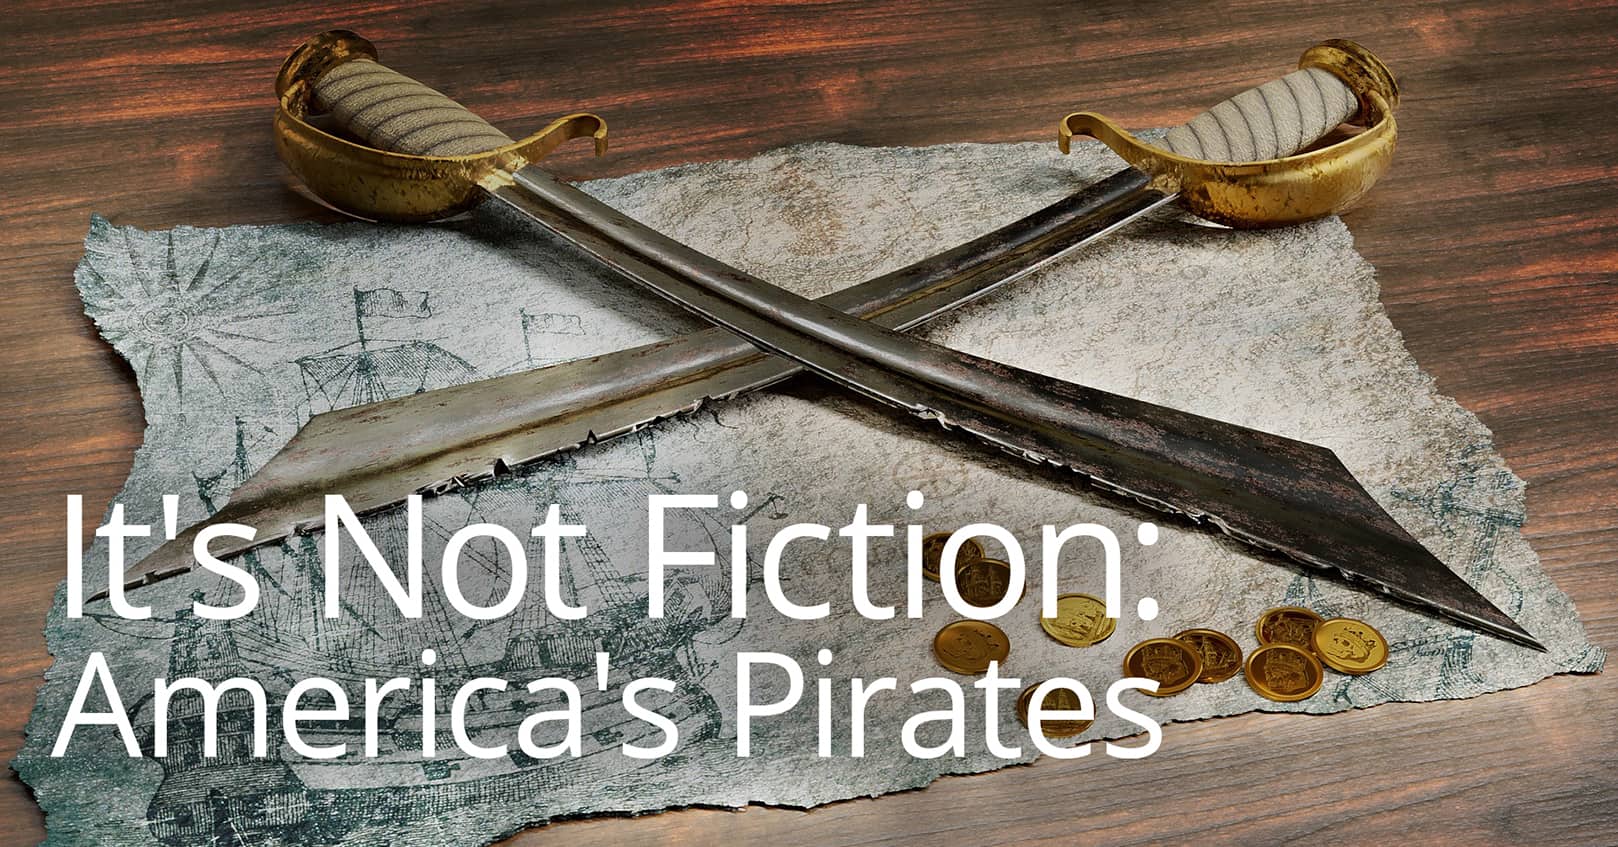 America's pirates and pirate books